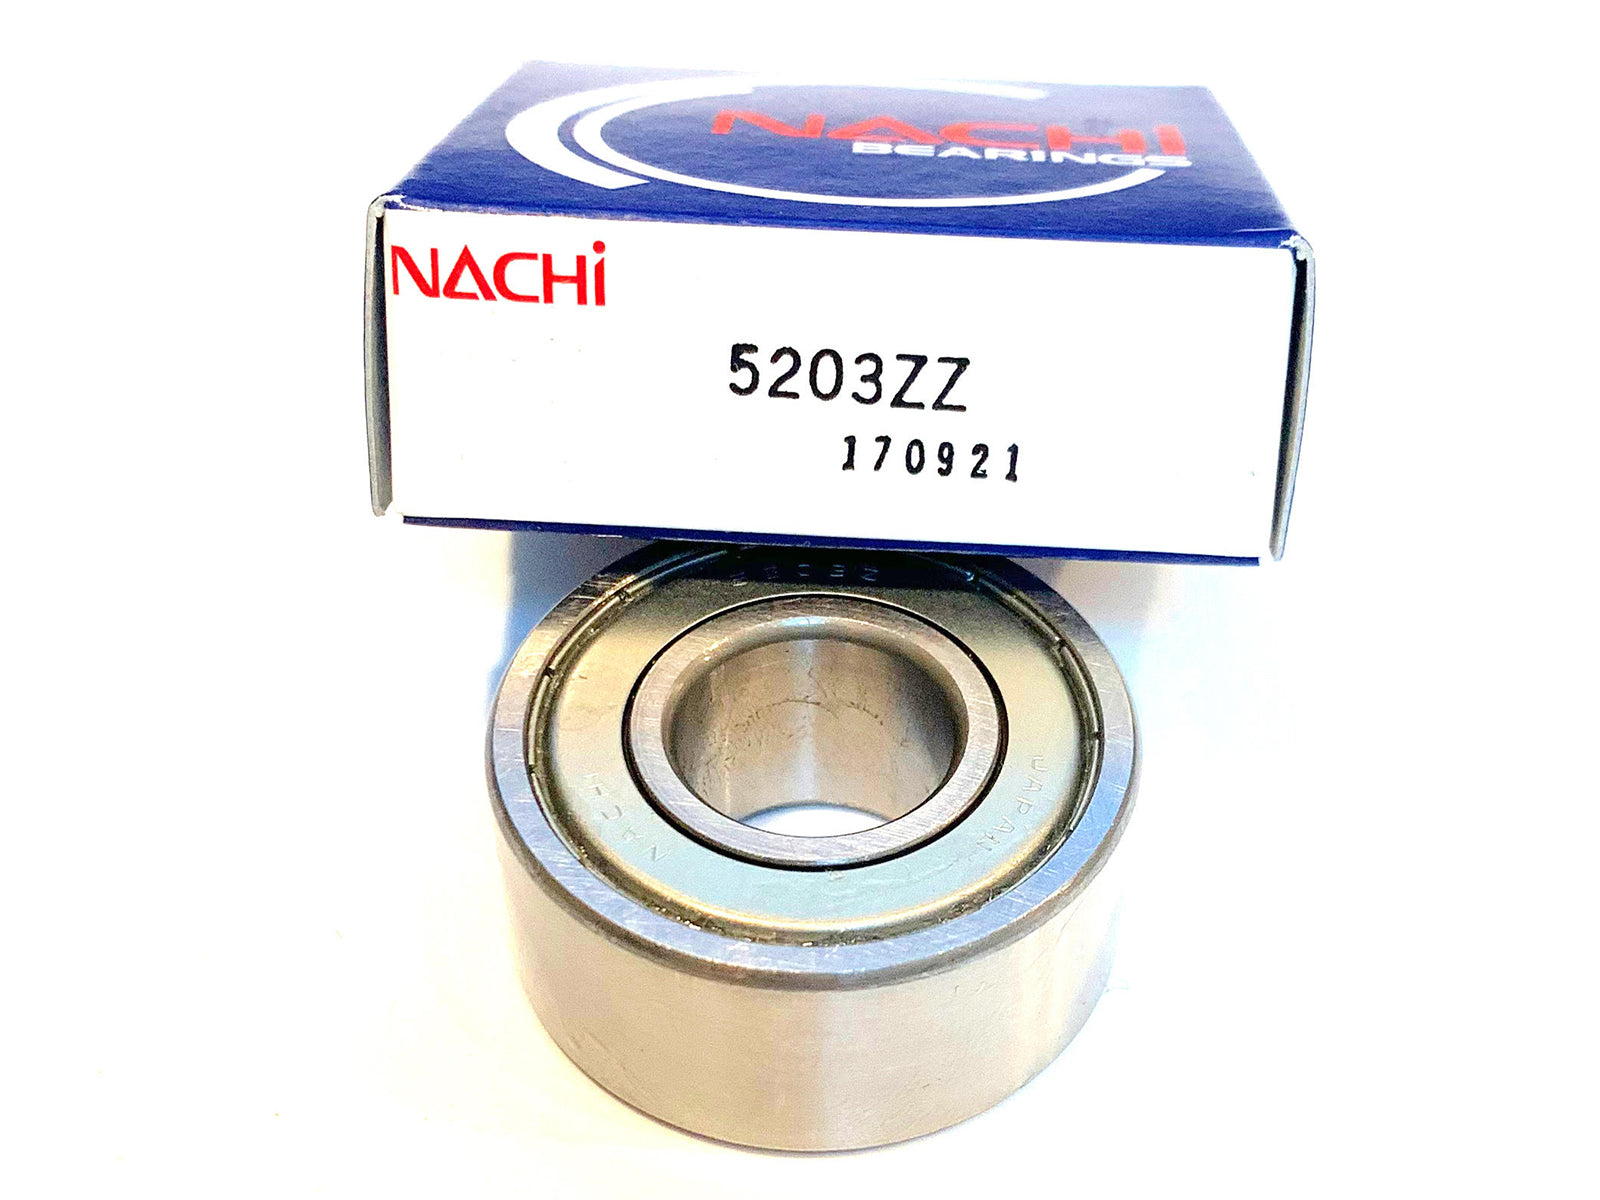 5203-ZZ Nachi Ball Bearing - ppdistributors